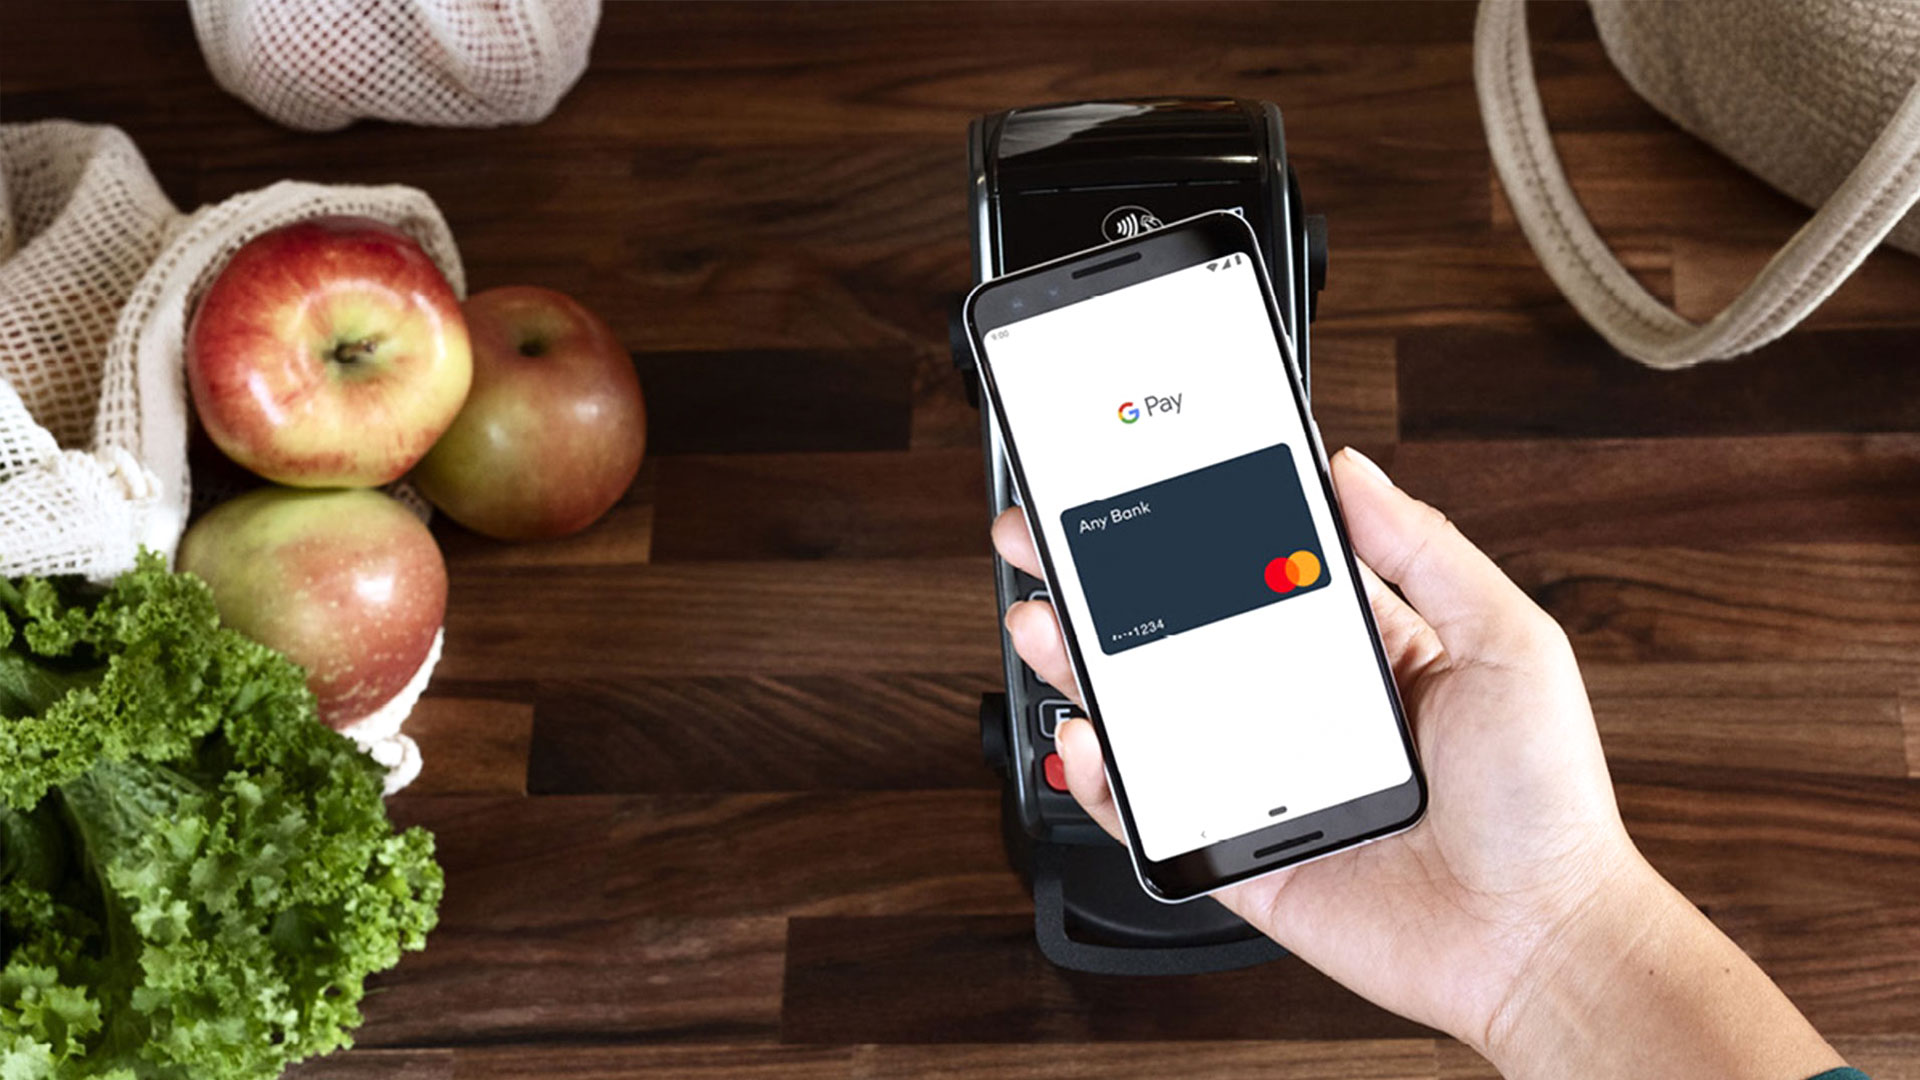 Google Pay: Secure UPI payment